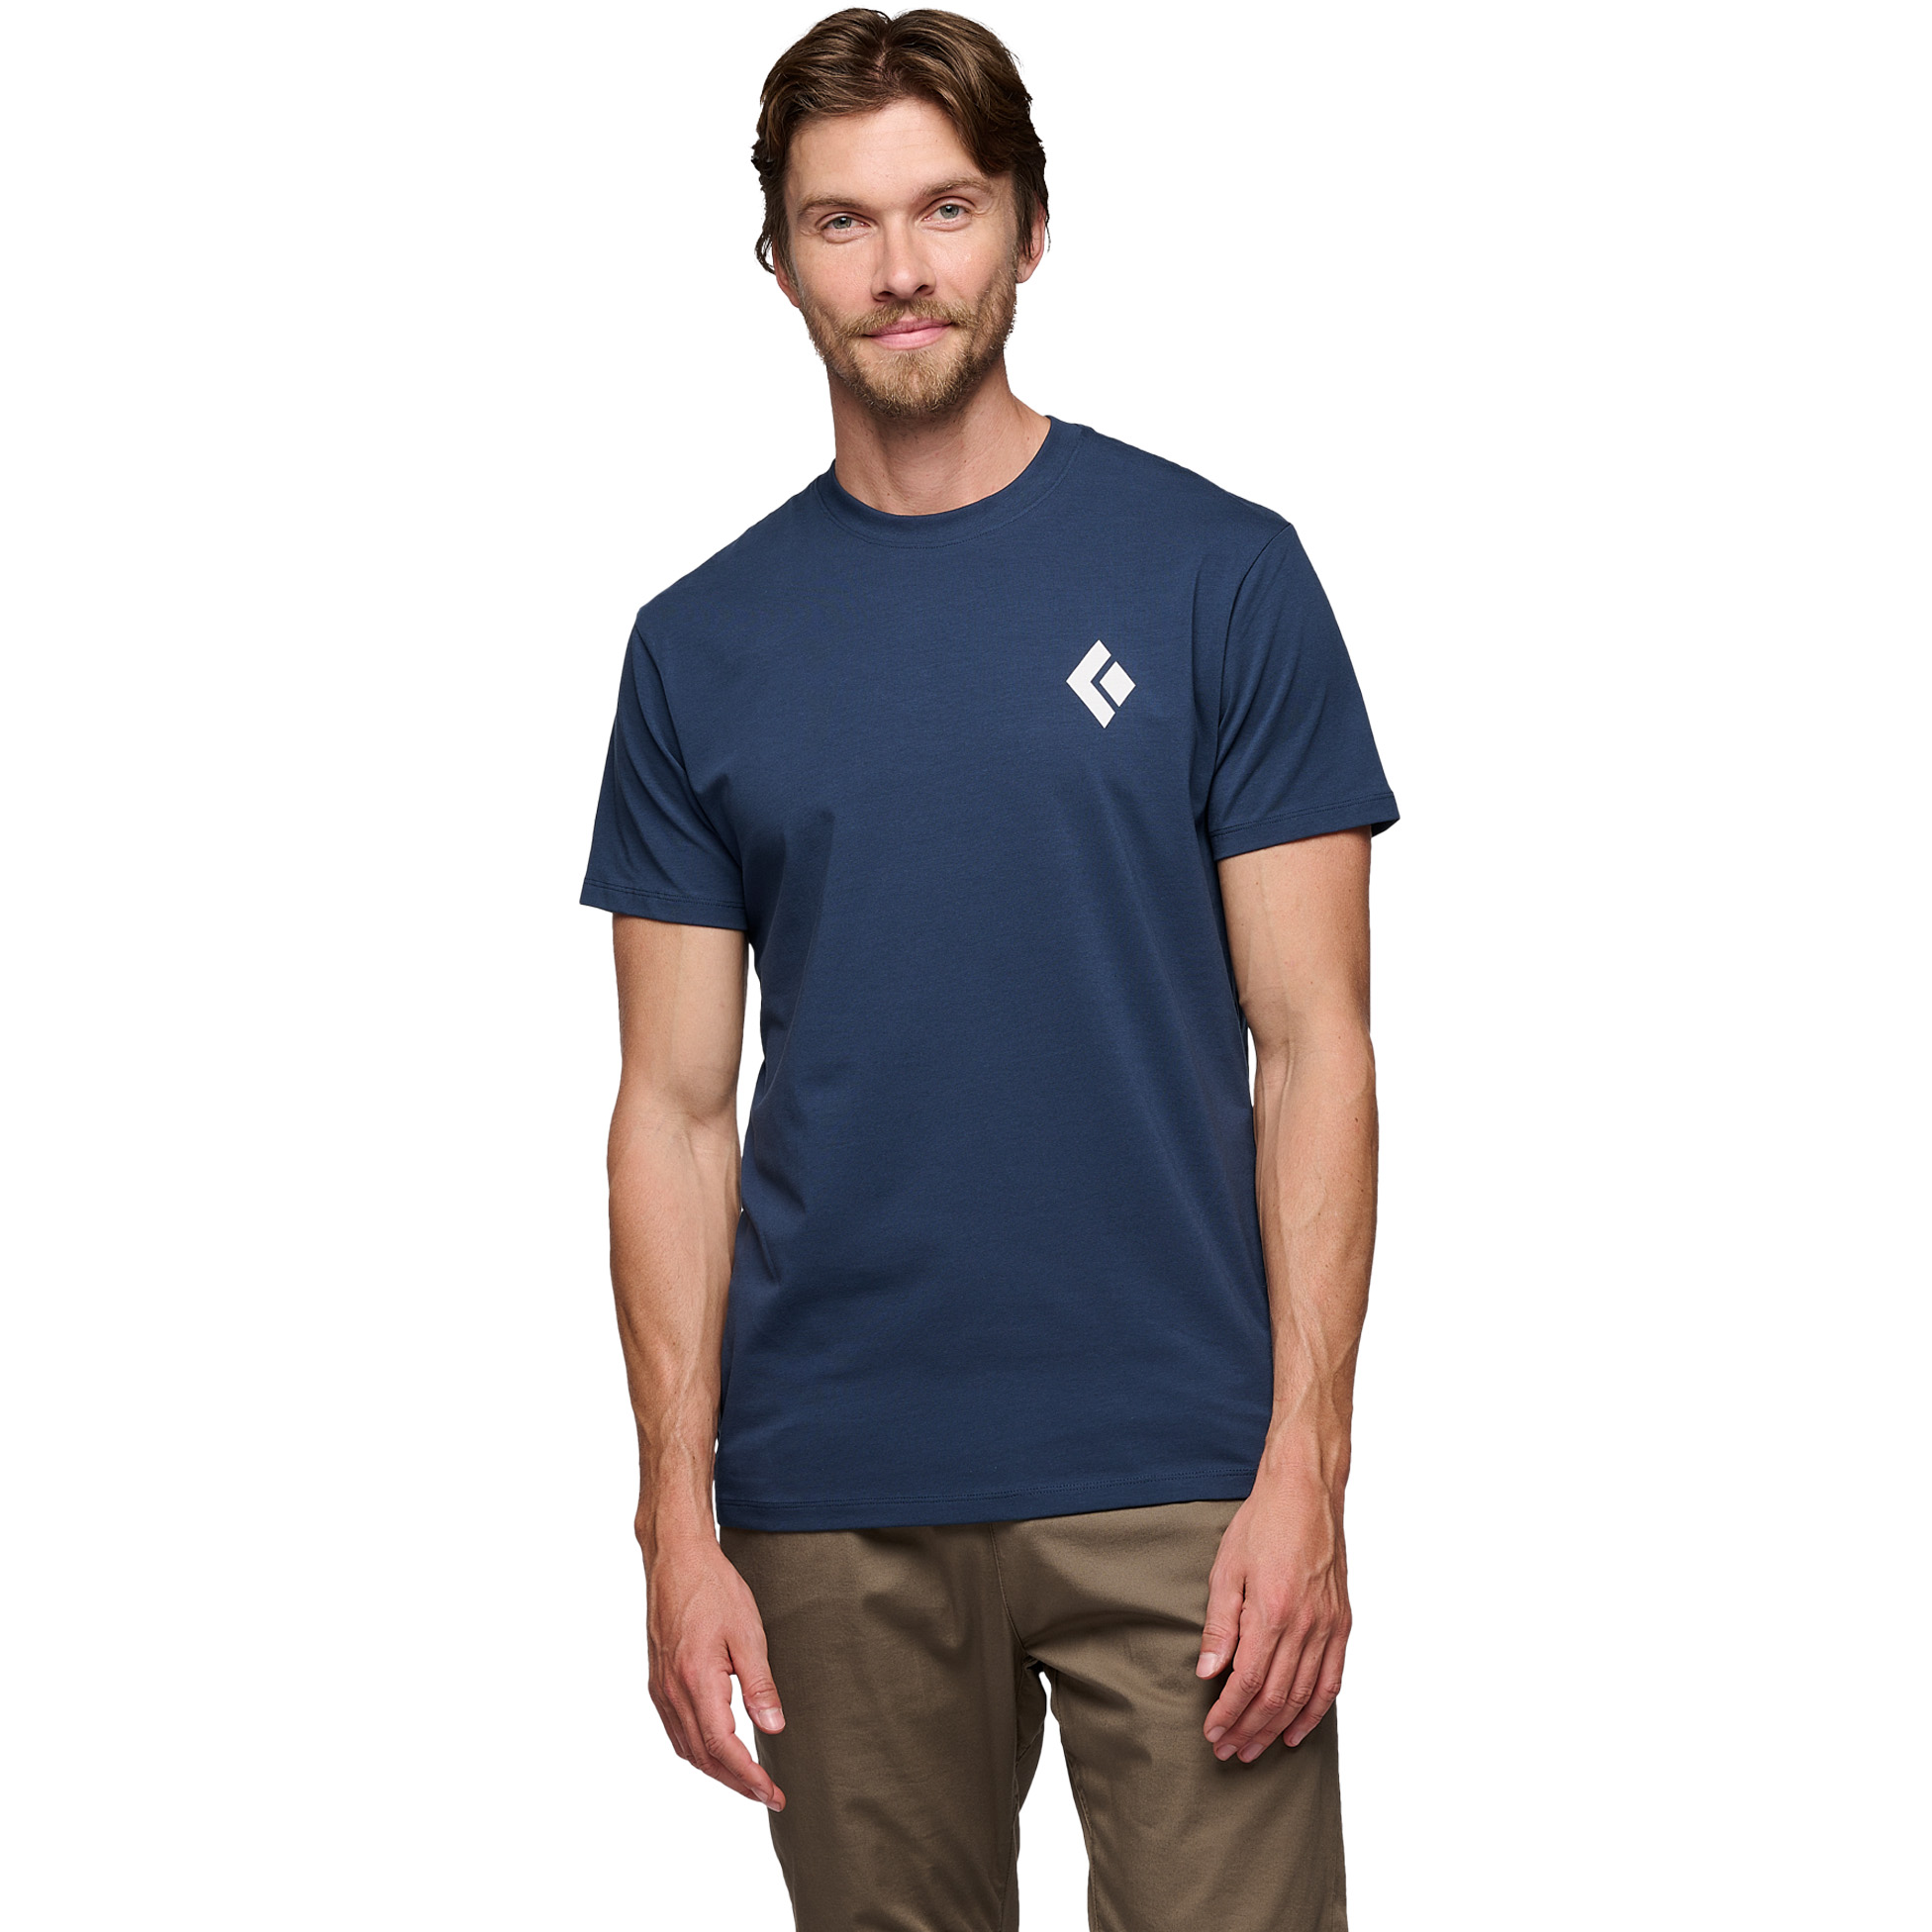 Black Diamond Equipment For Alpinists Short Sleeve T-shirt